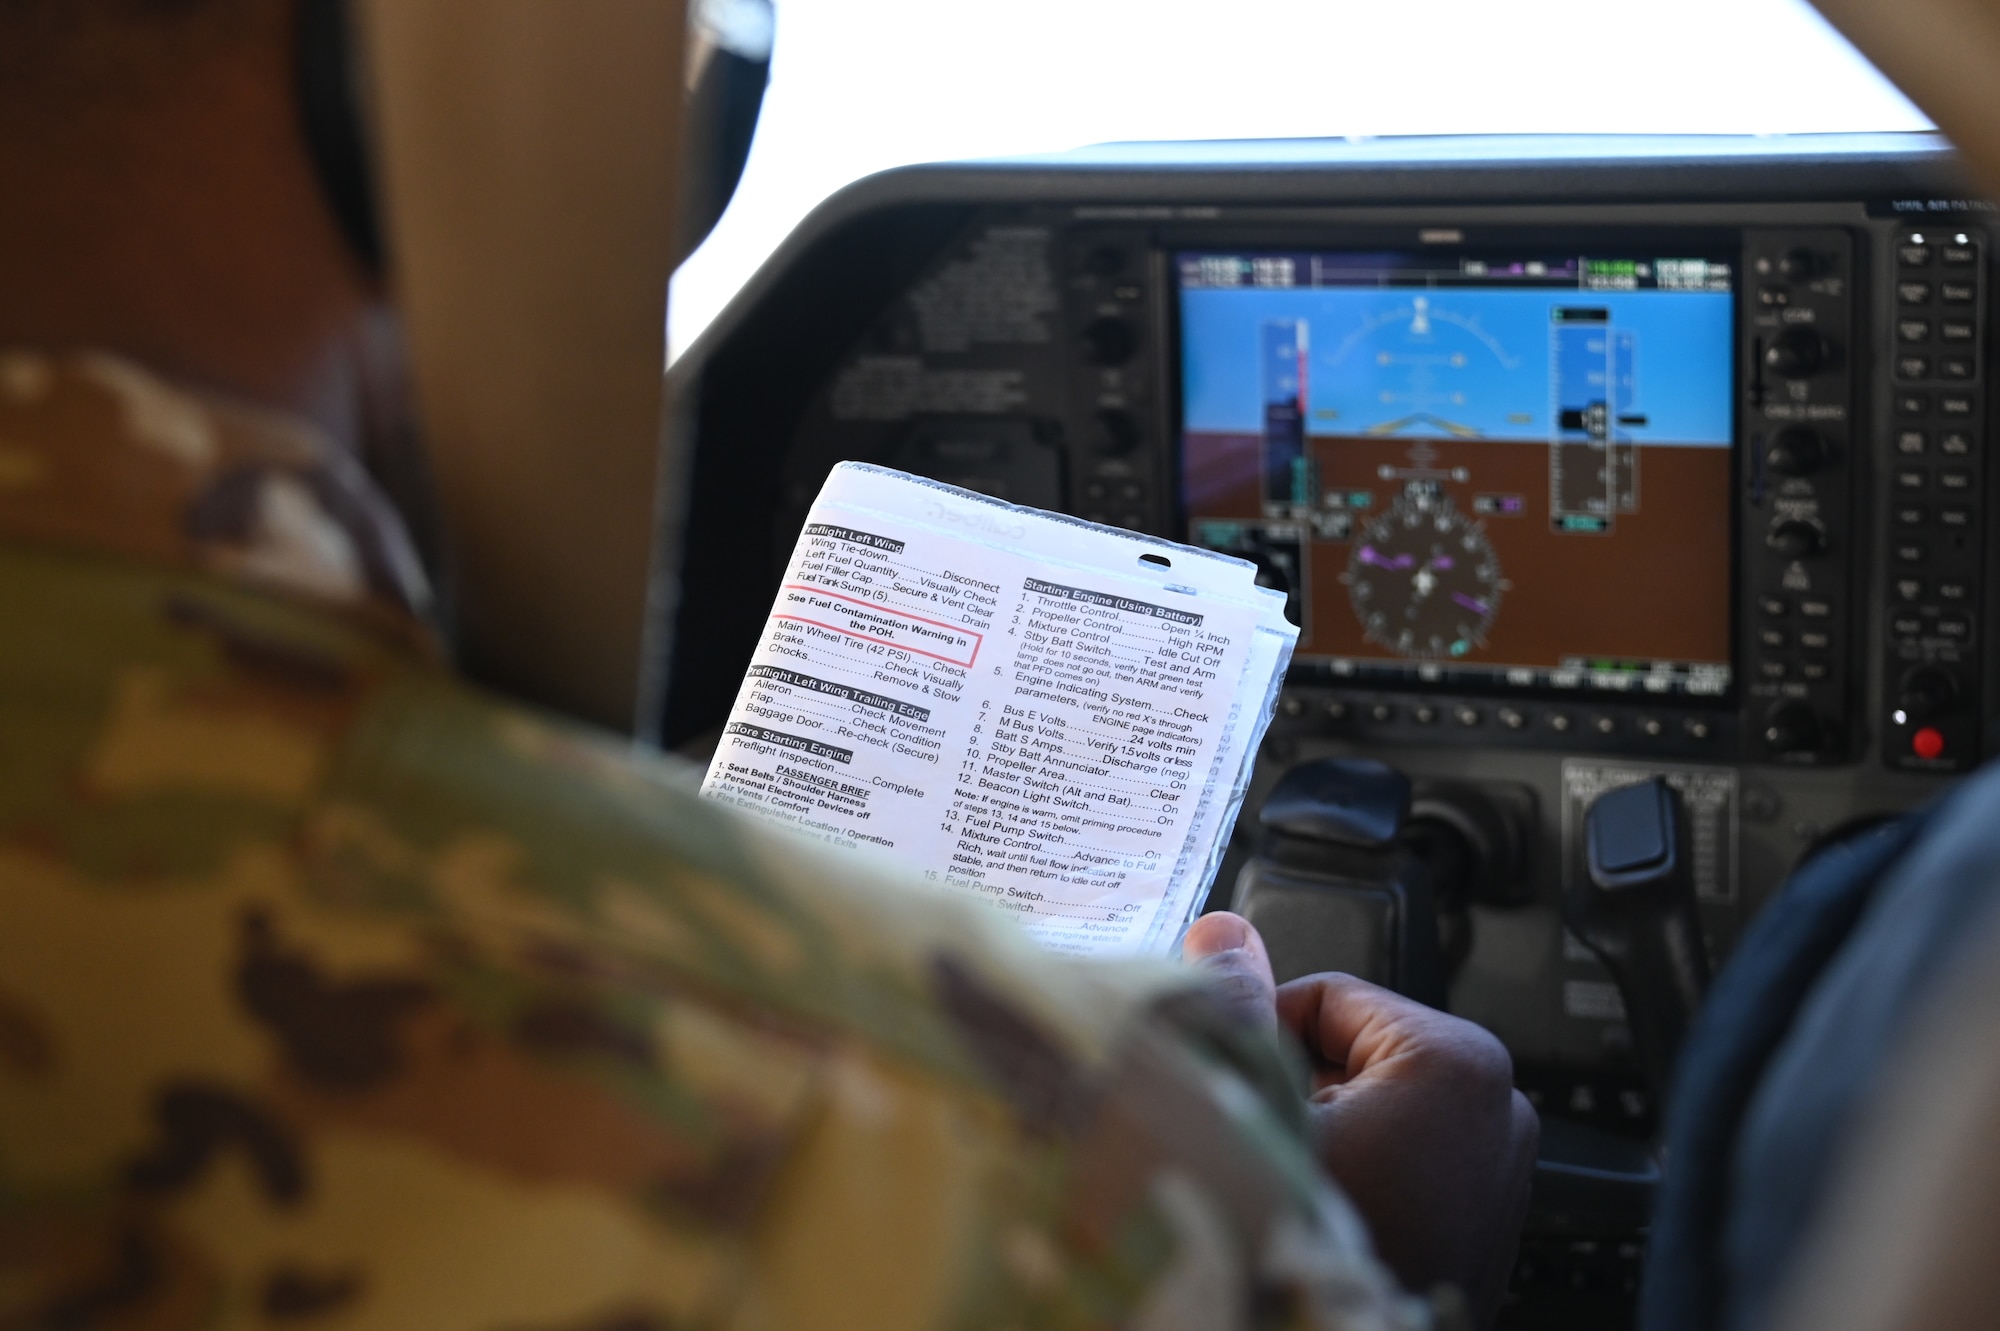 Airman in cockpit